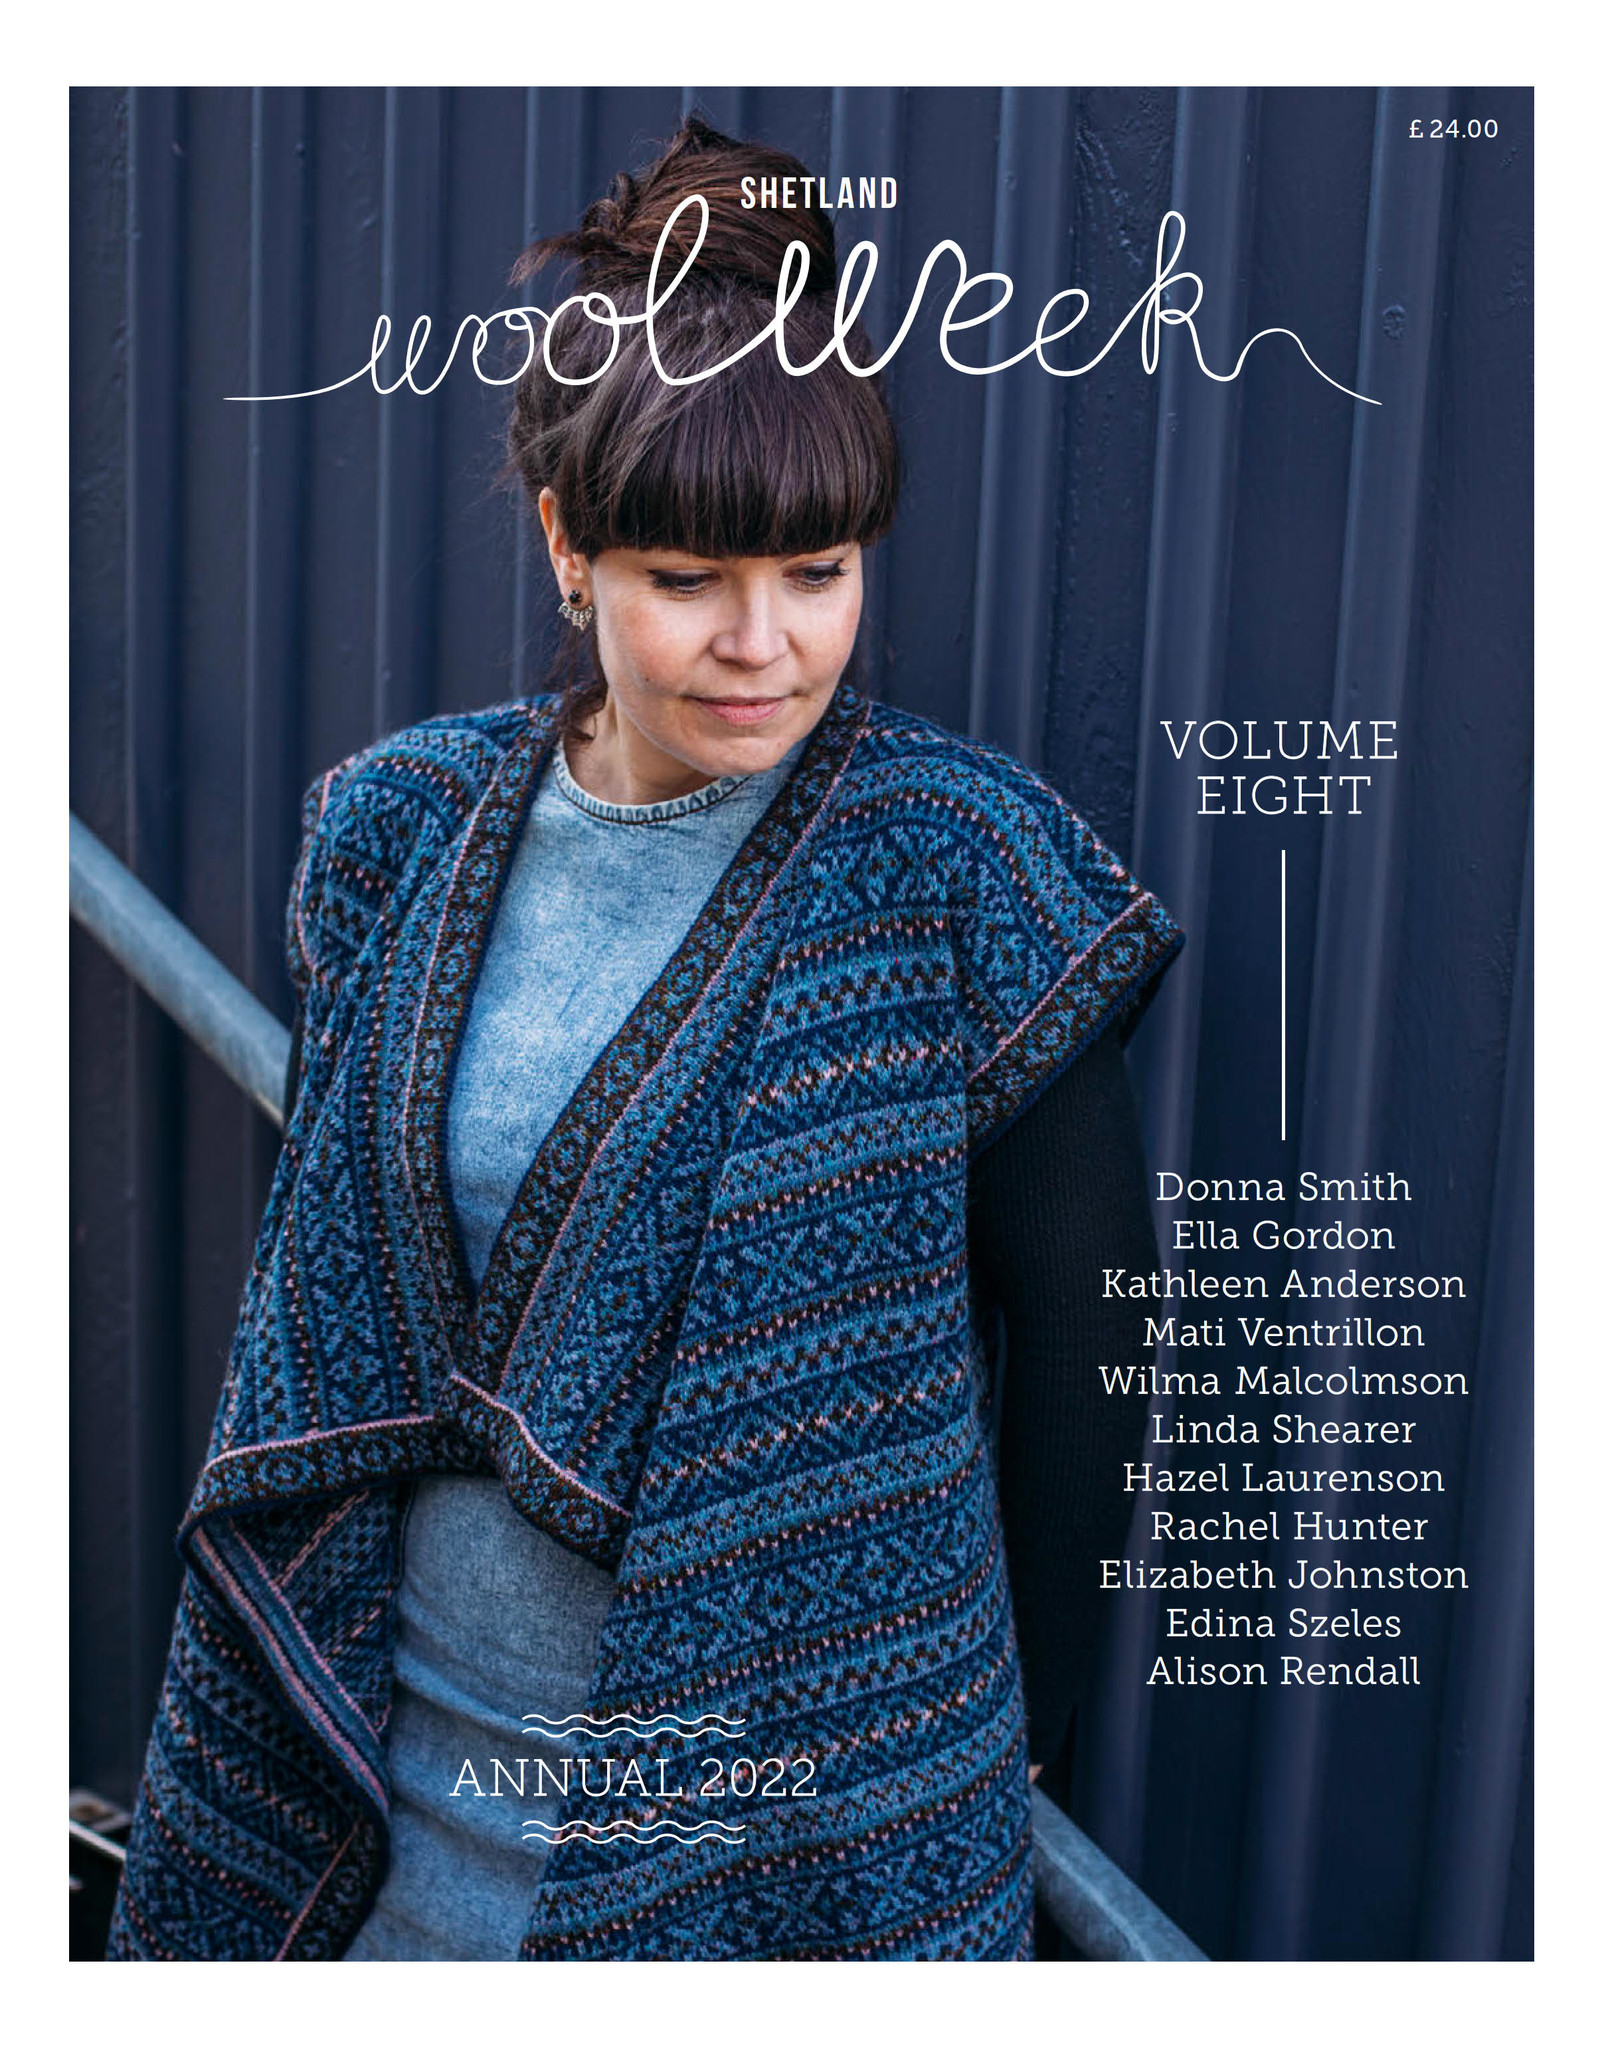 Shetland Wool Week Shetland Wool Week Annual 2022